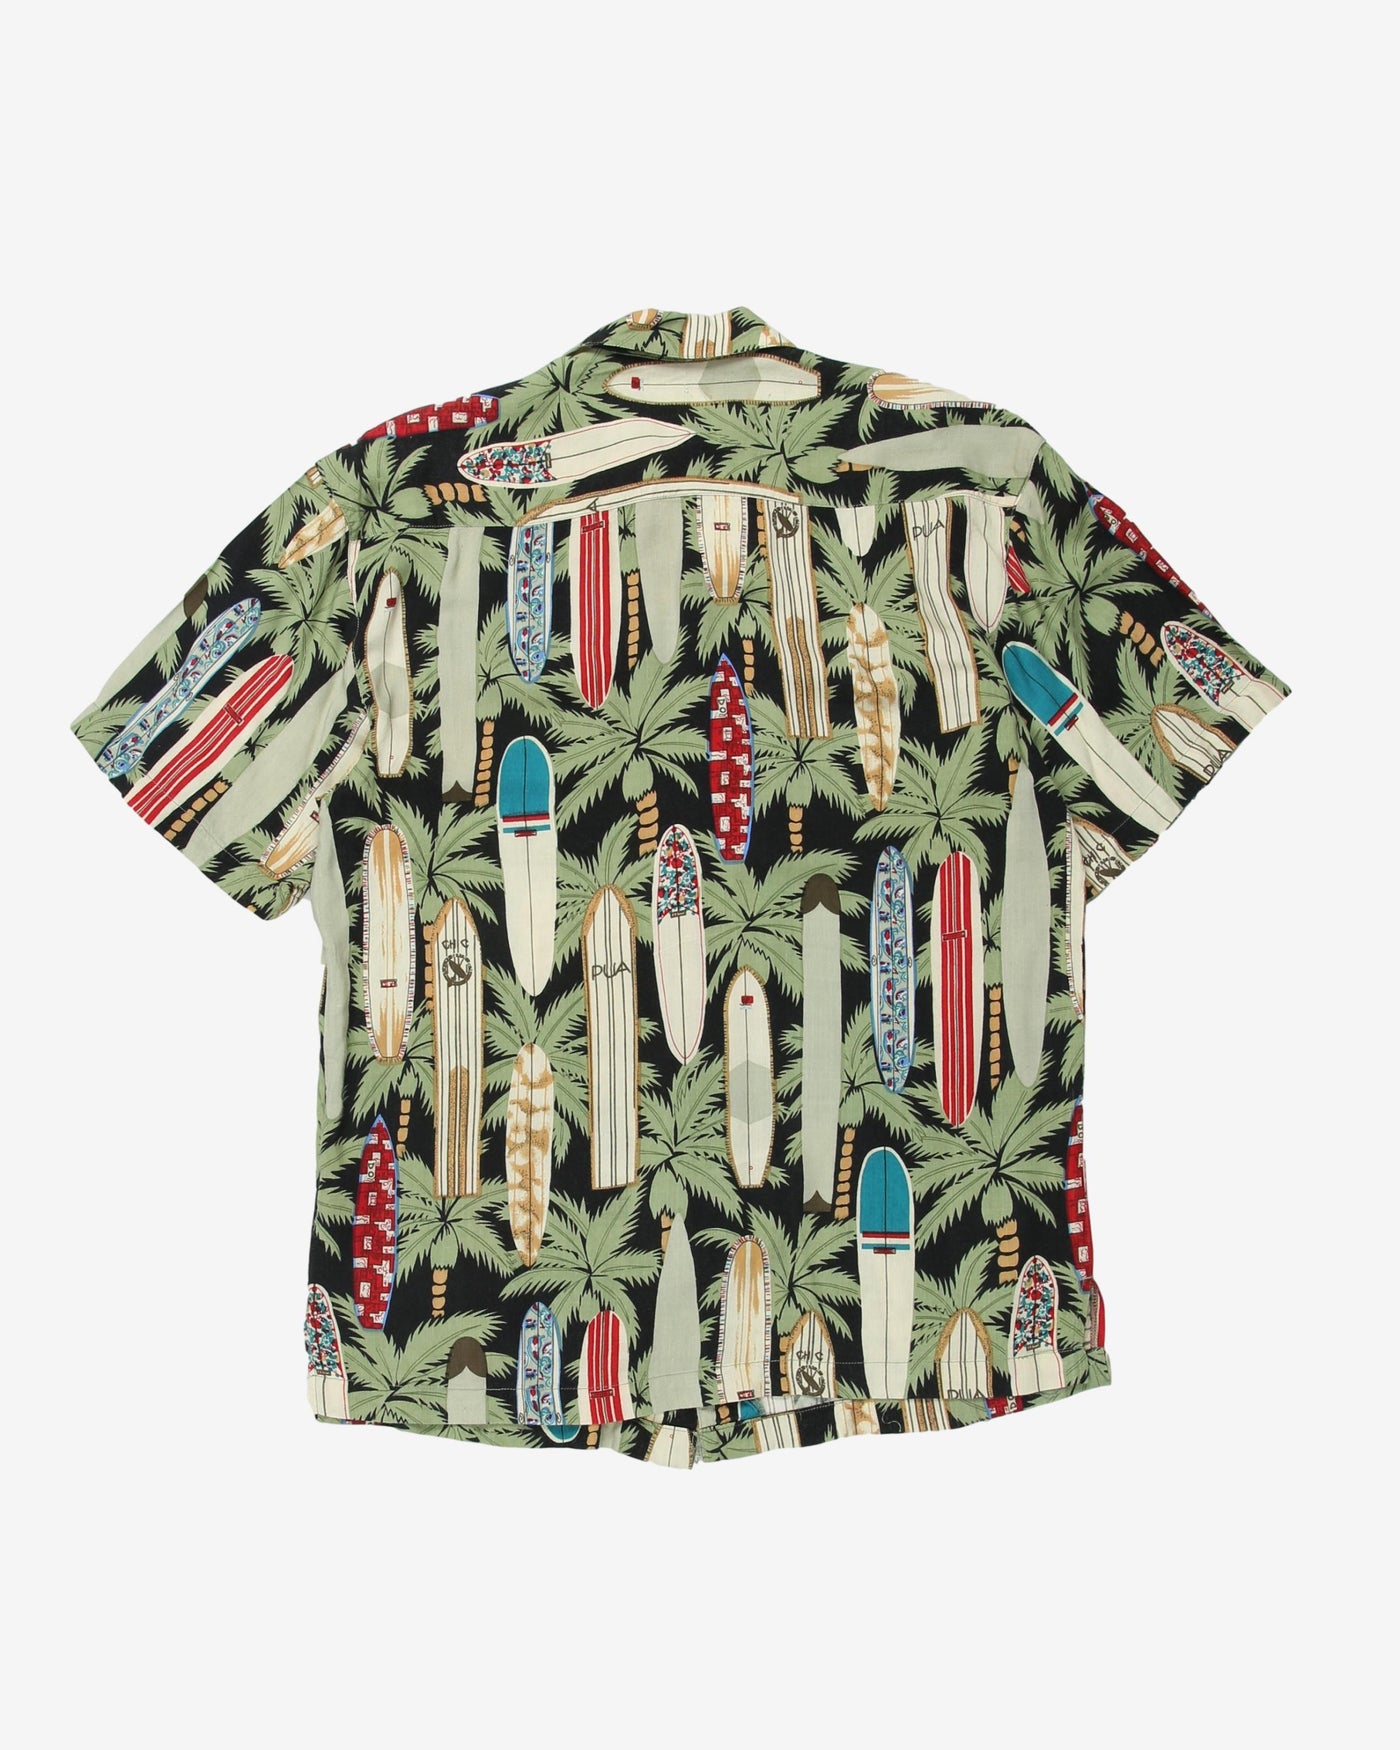 Aloha Joe patterned hawaiian shirt - S / M